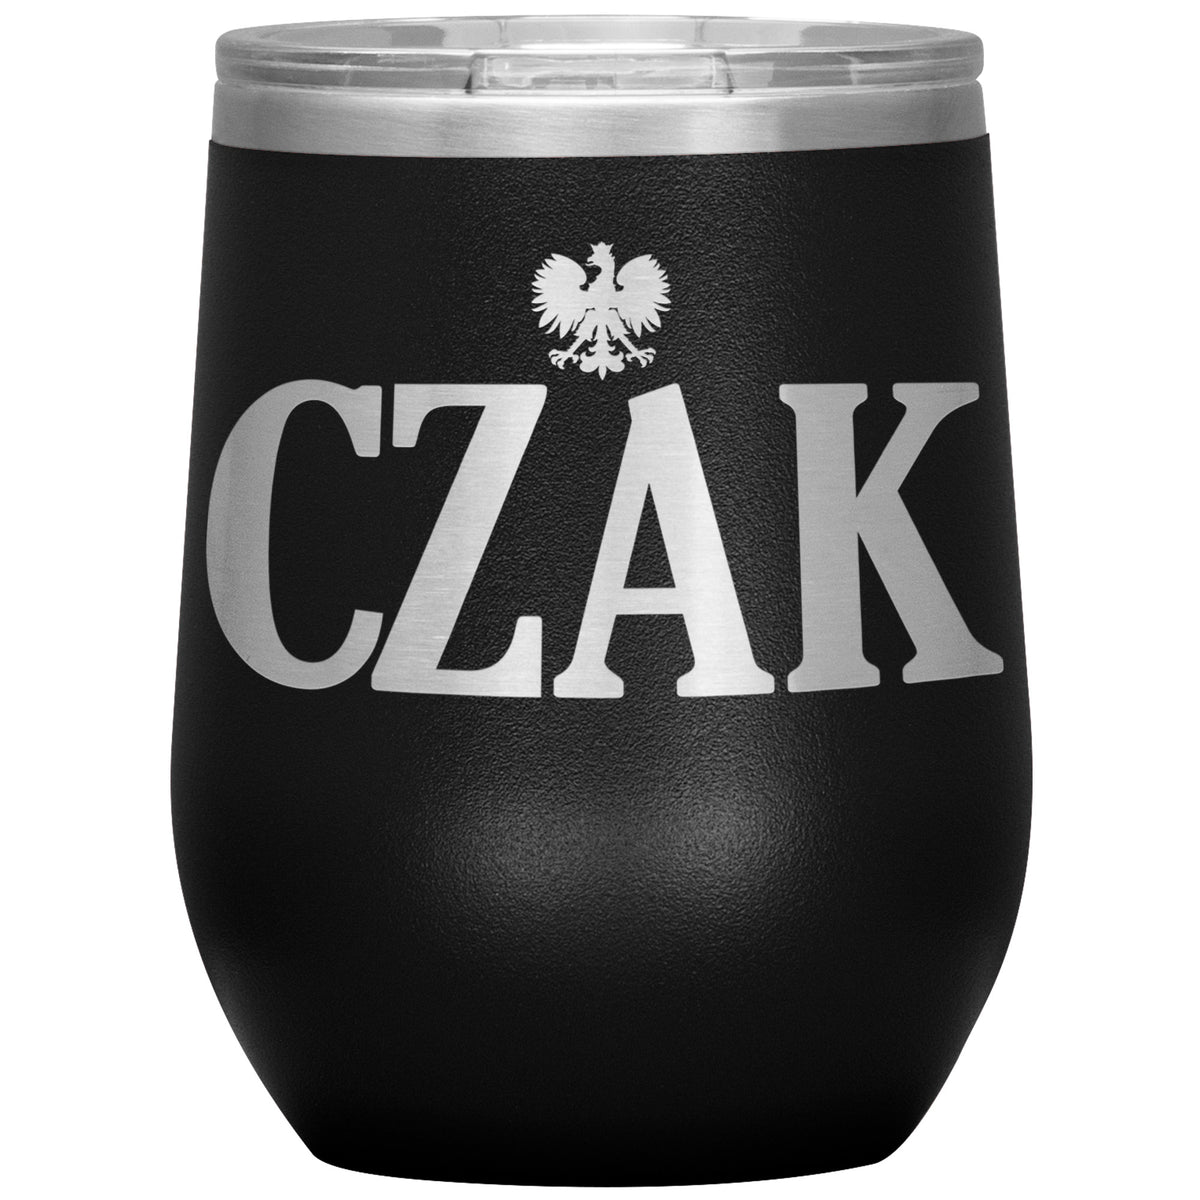 Polish Surnames Ending In CZAK Insulated Wine Tumbler Tumblers teelaunch Black  